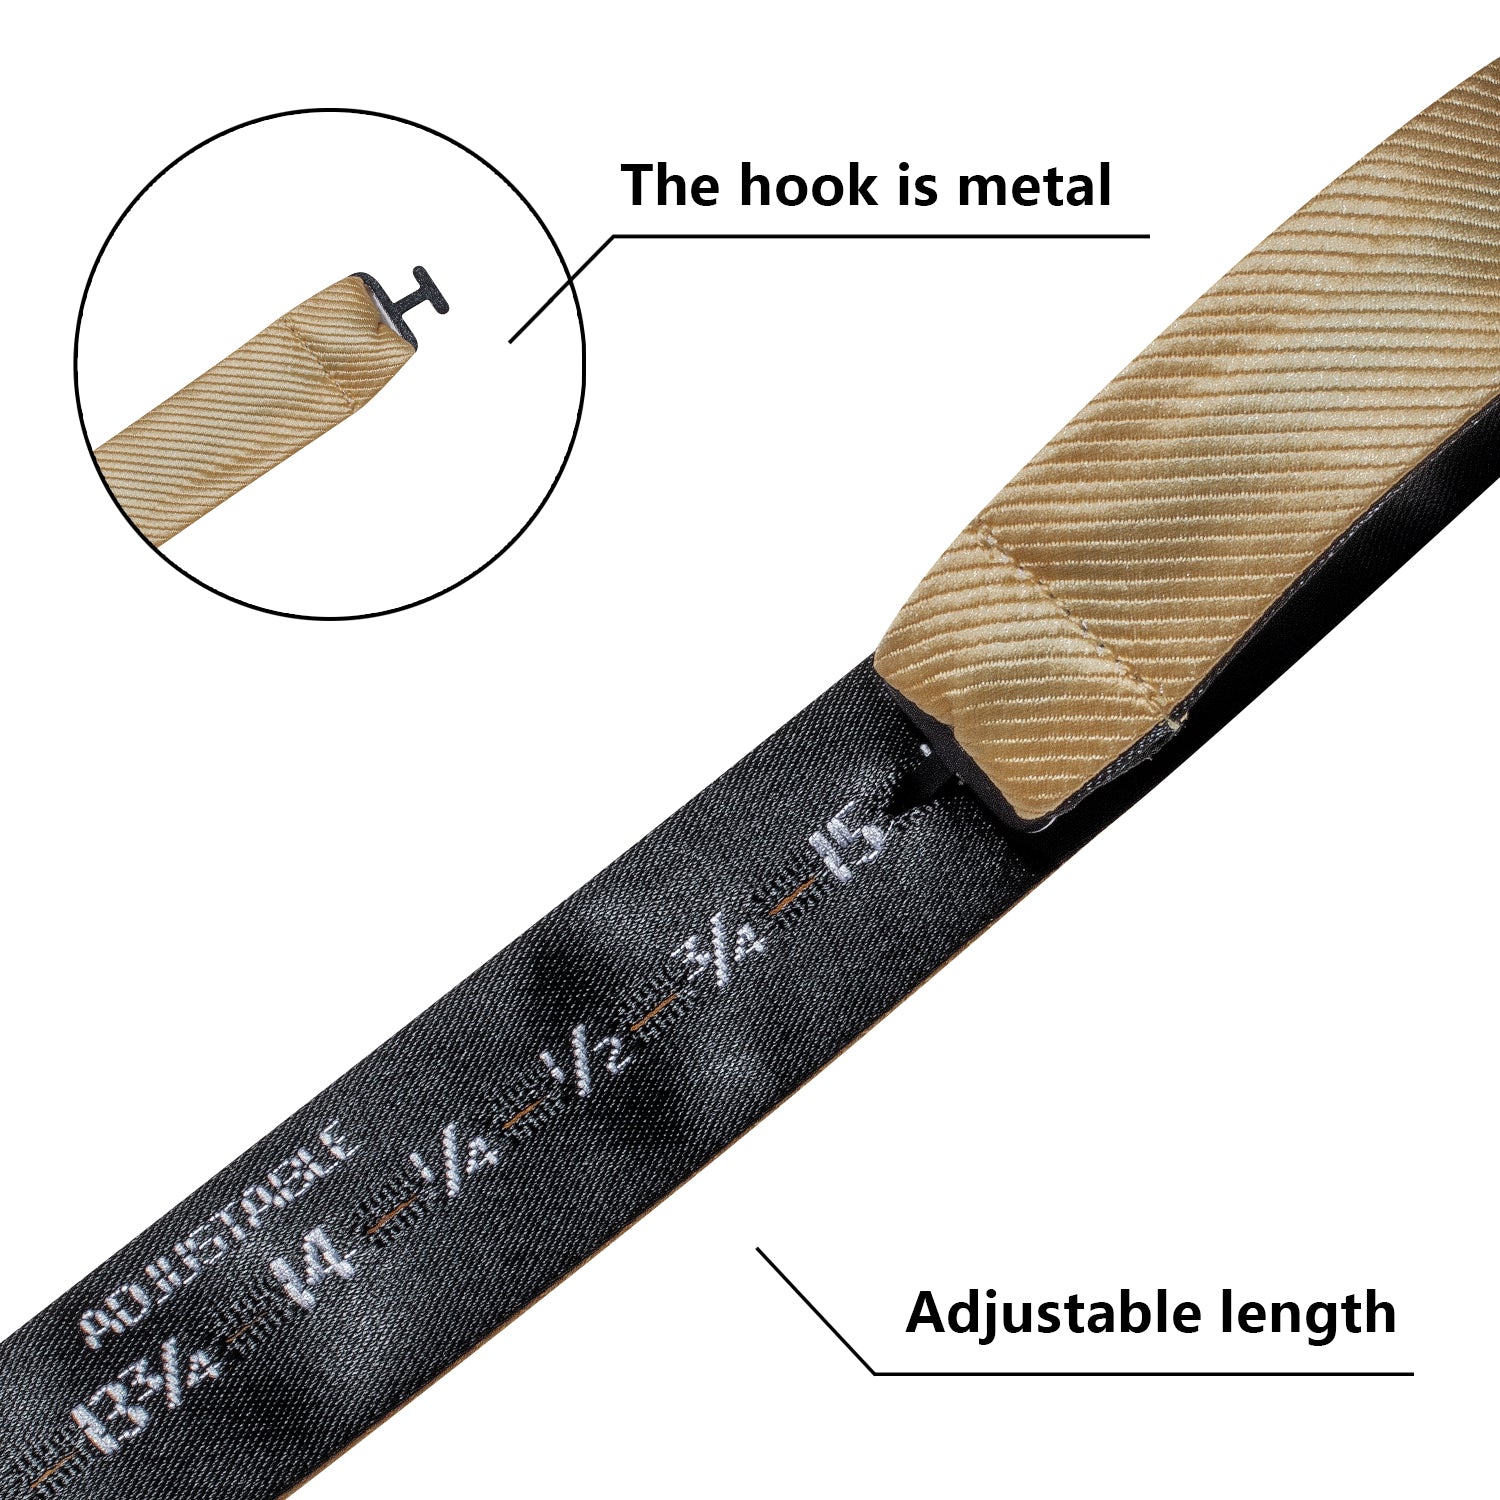 Beige Striped Silk Self-tied Bow Tie Pocket Square Cufflinks Set